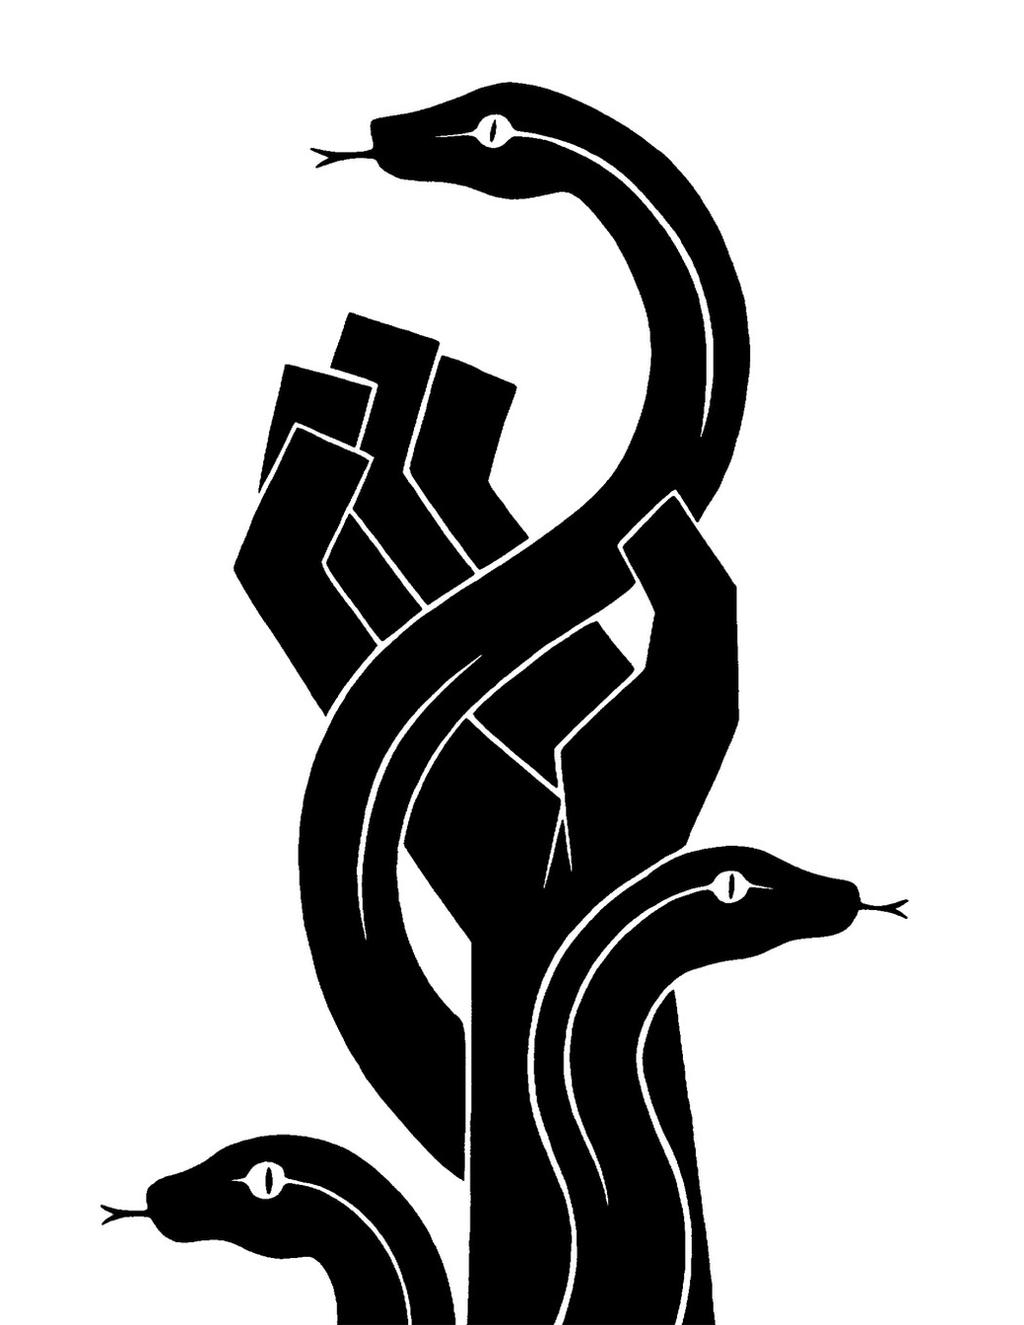 the_serpent_s_hand_by_sunnyparallax-d8jty7j.jpg